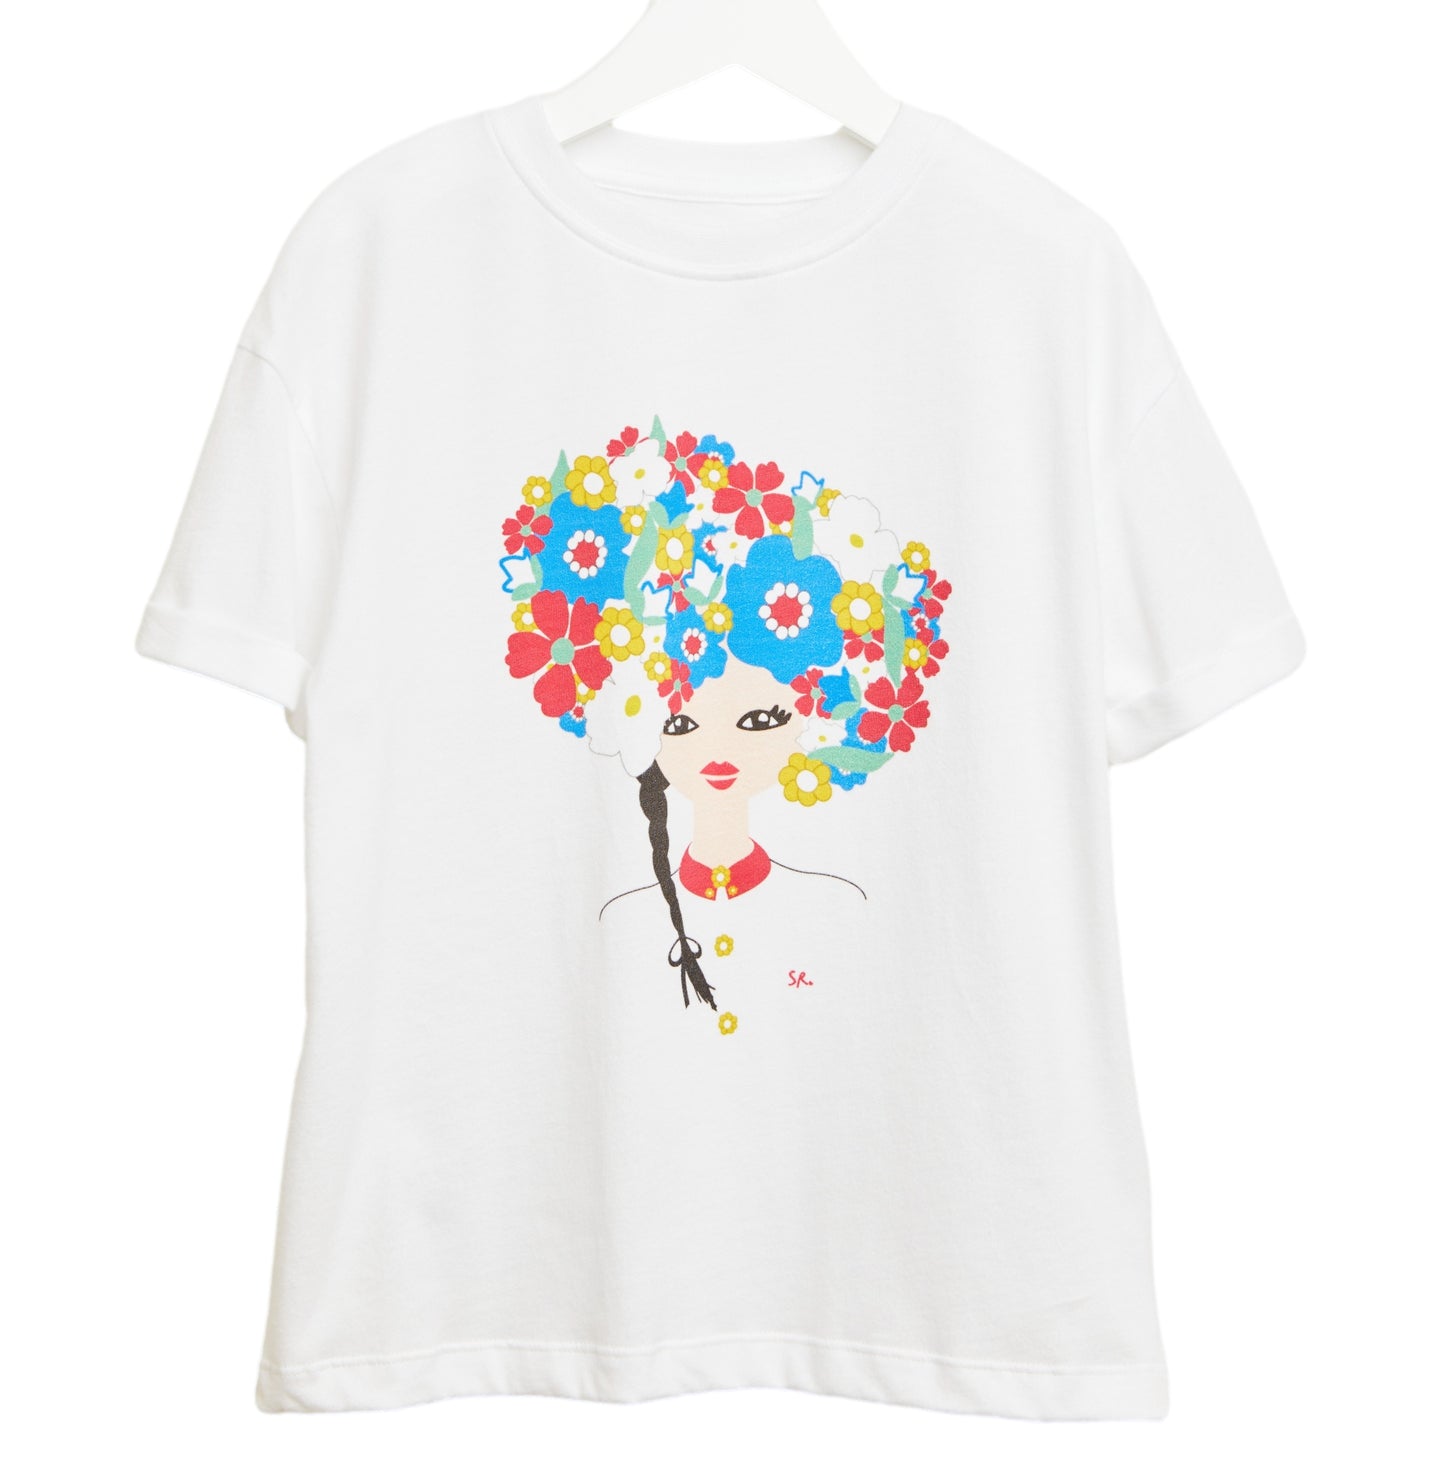 Sonia Rykiel Meg Graphic T-Shirt